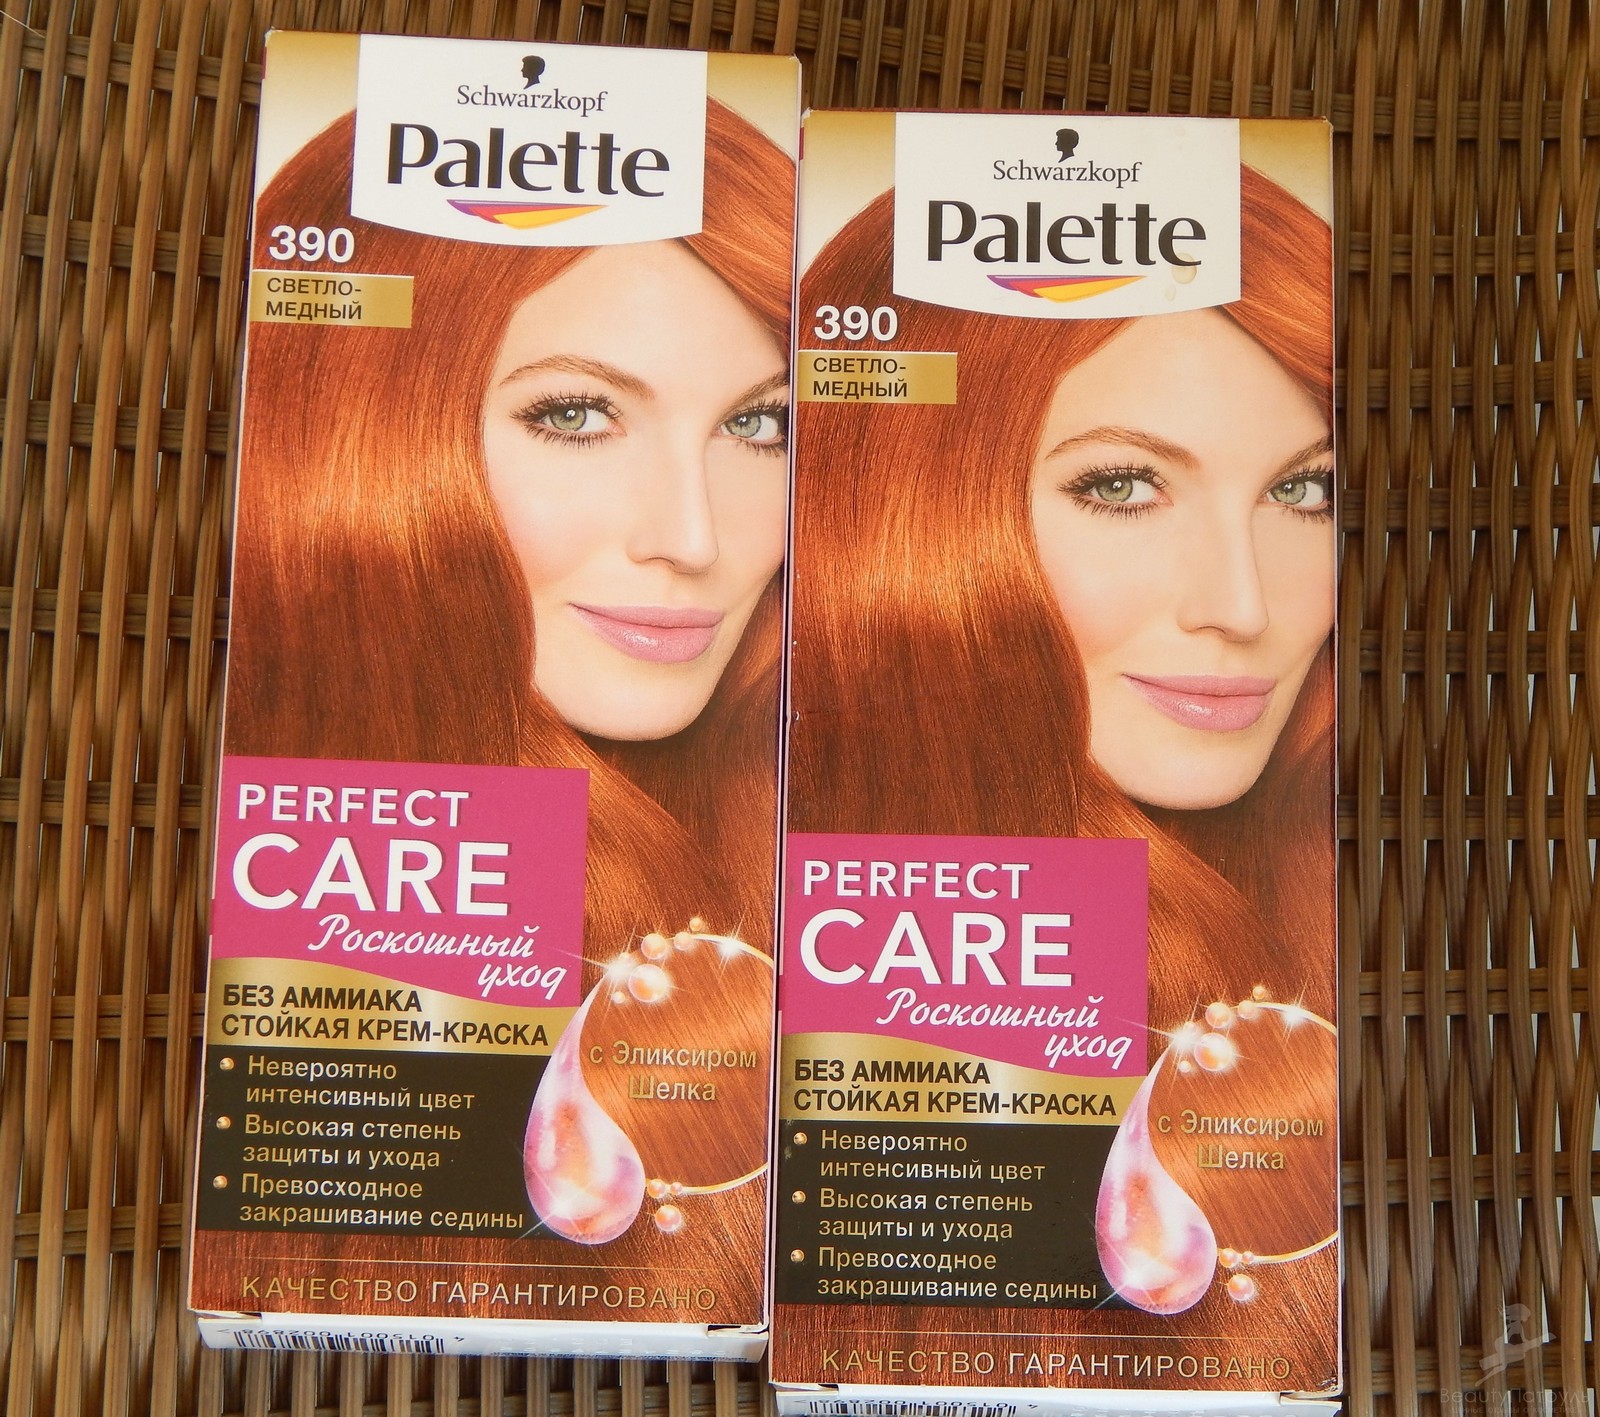 Краска для волос schwarzkopf palette perfect care